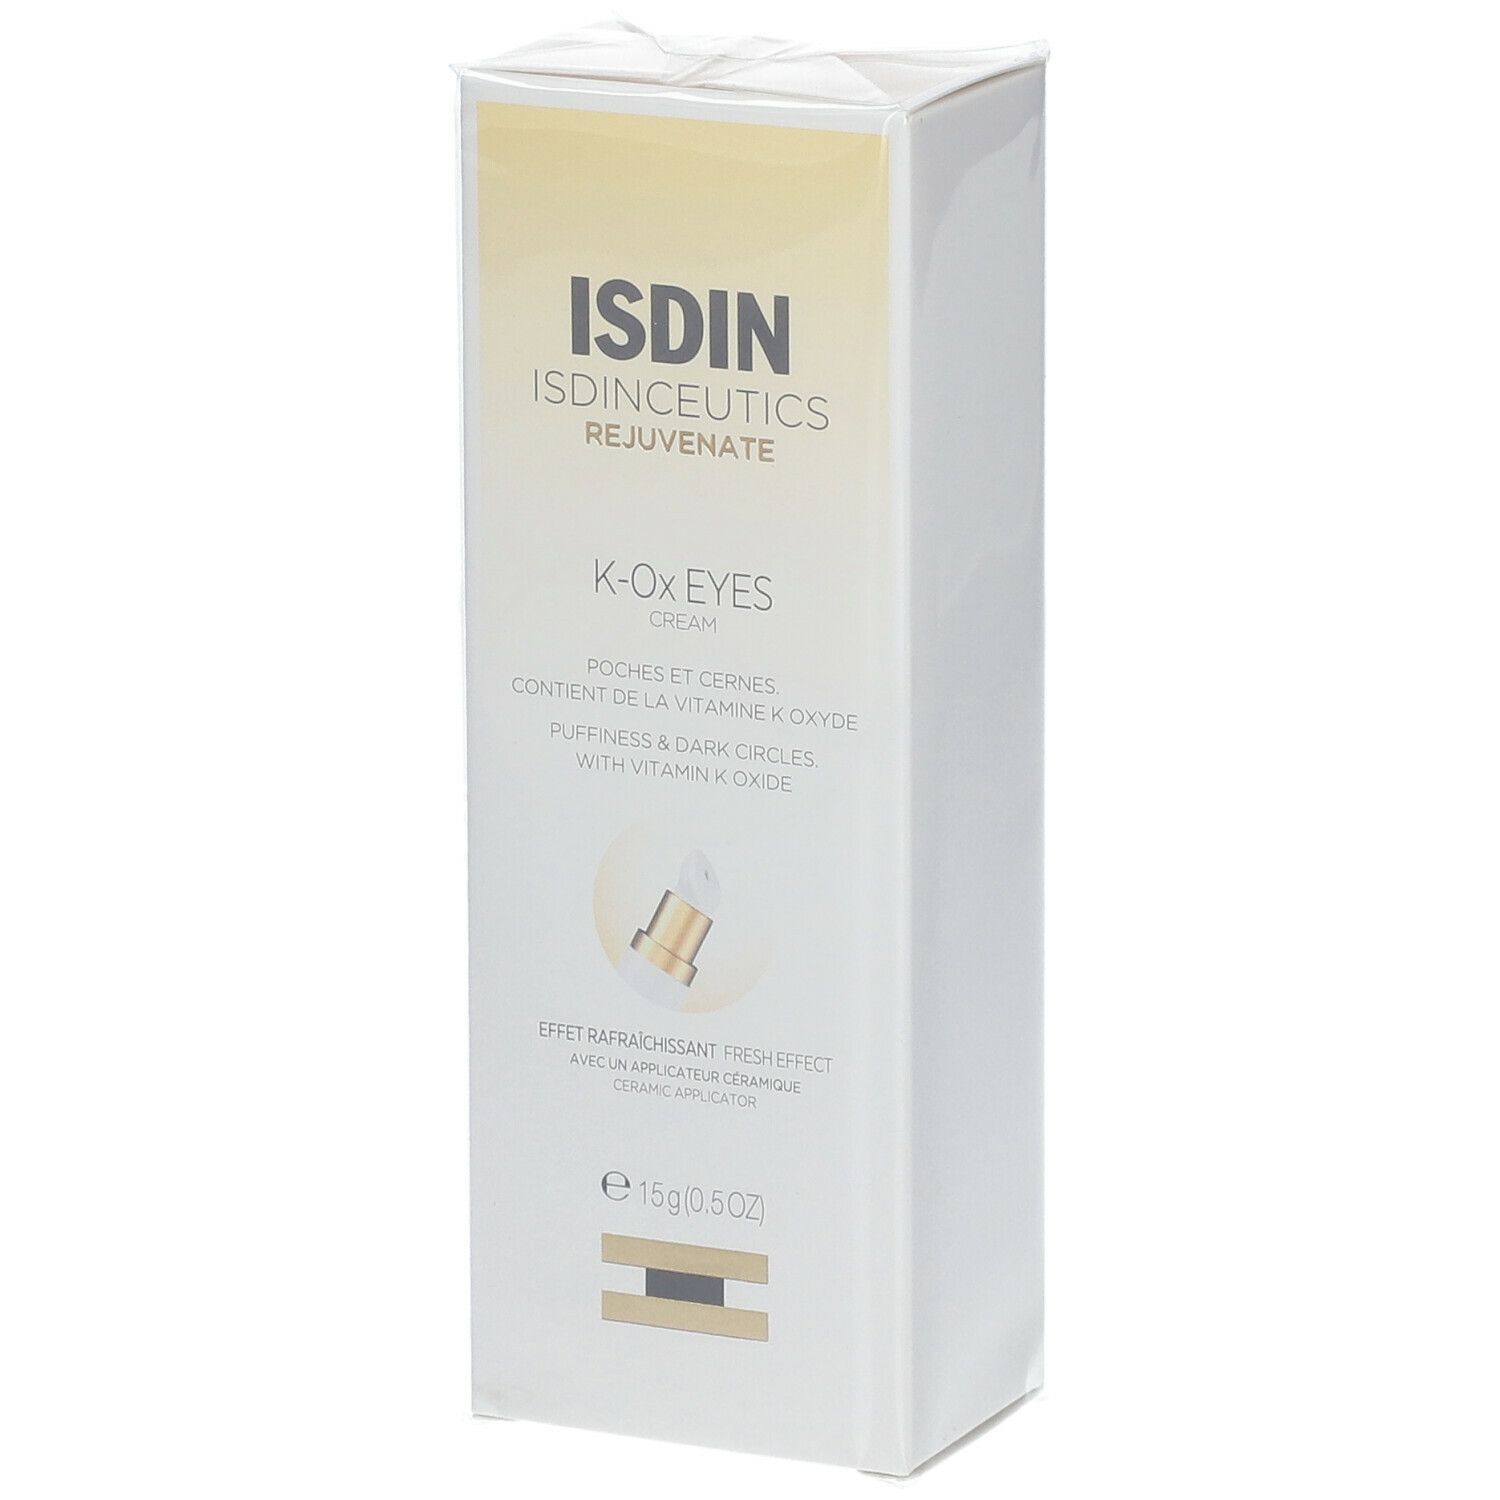 ISDIN® Isdinceutics K-Ox Eyes